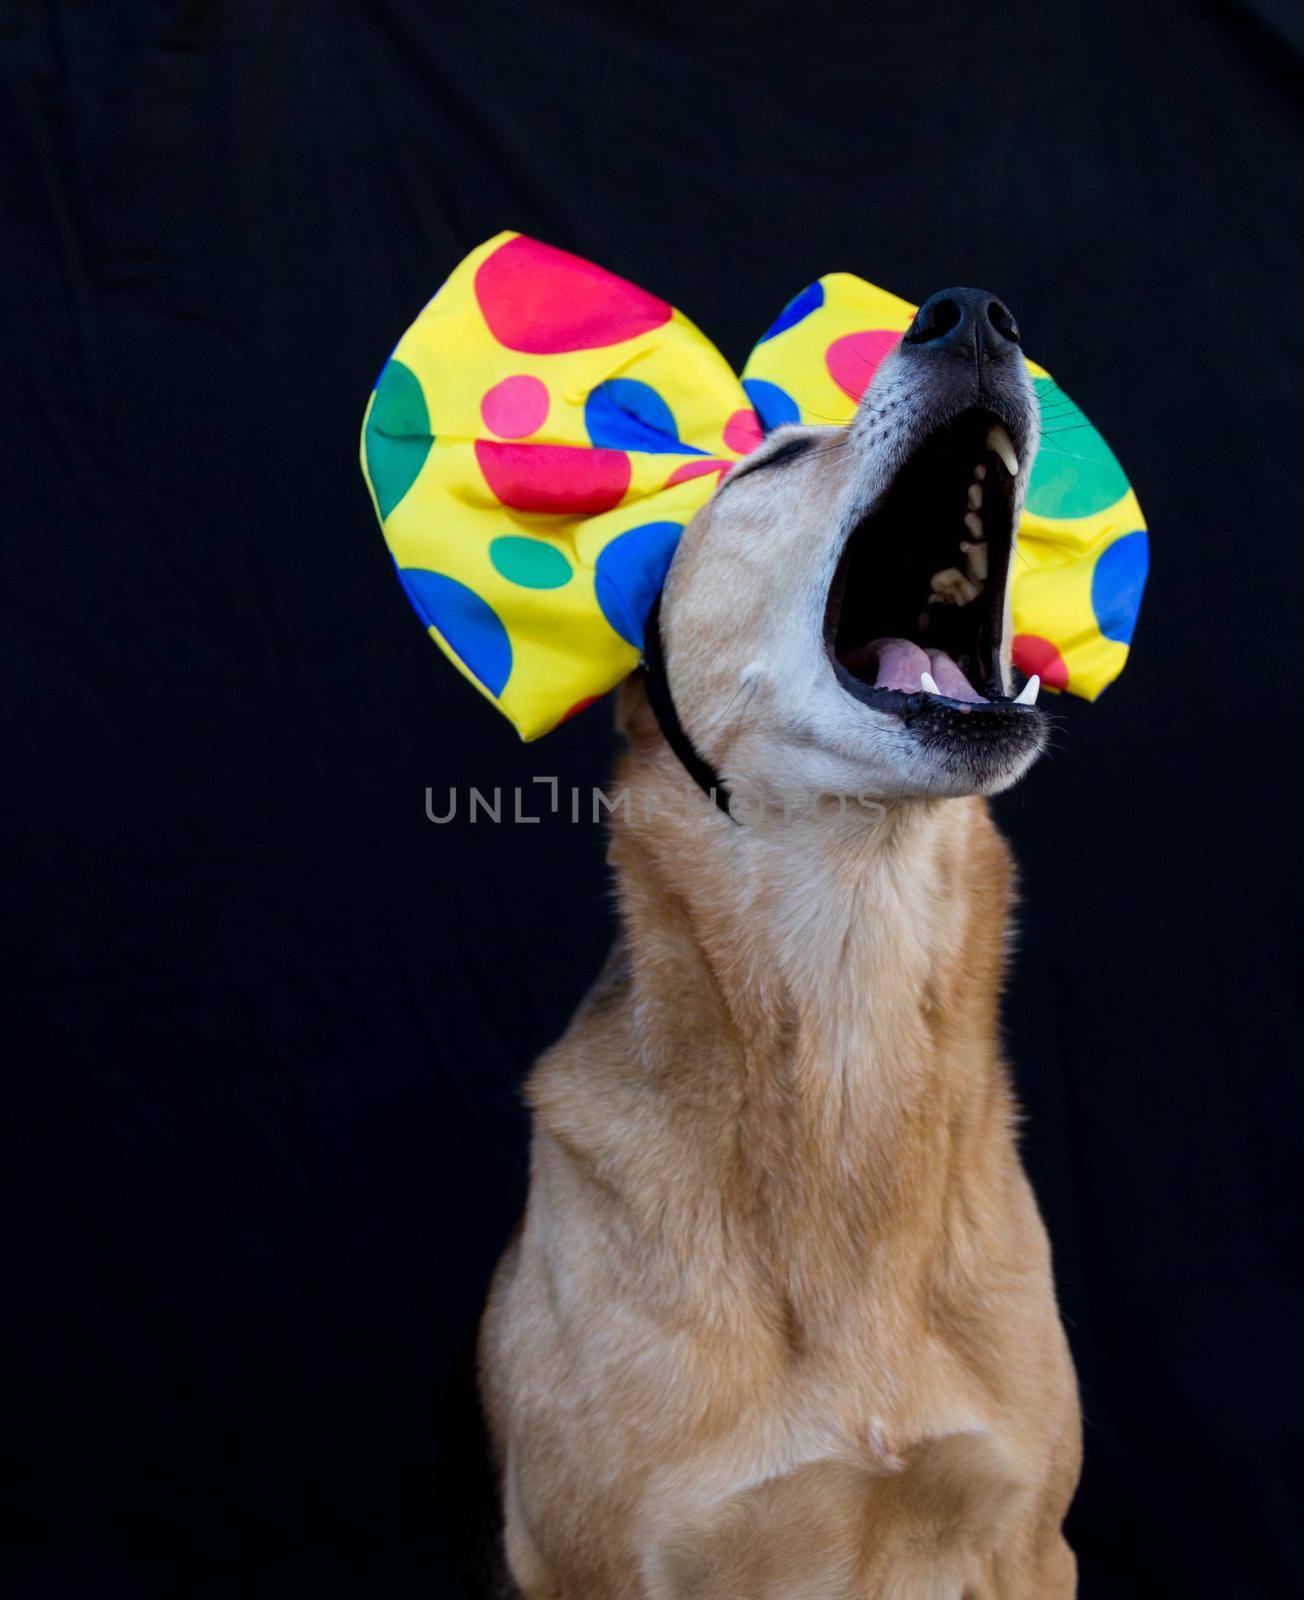 portrait of dog with a big polka dot bow on his head by GabrielaBertolini